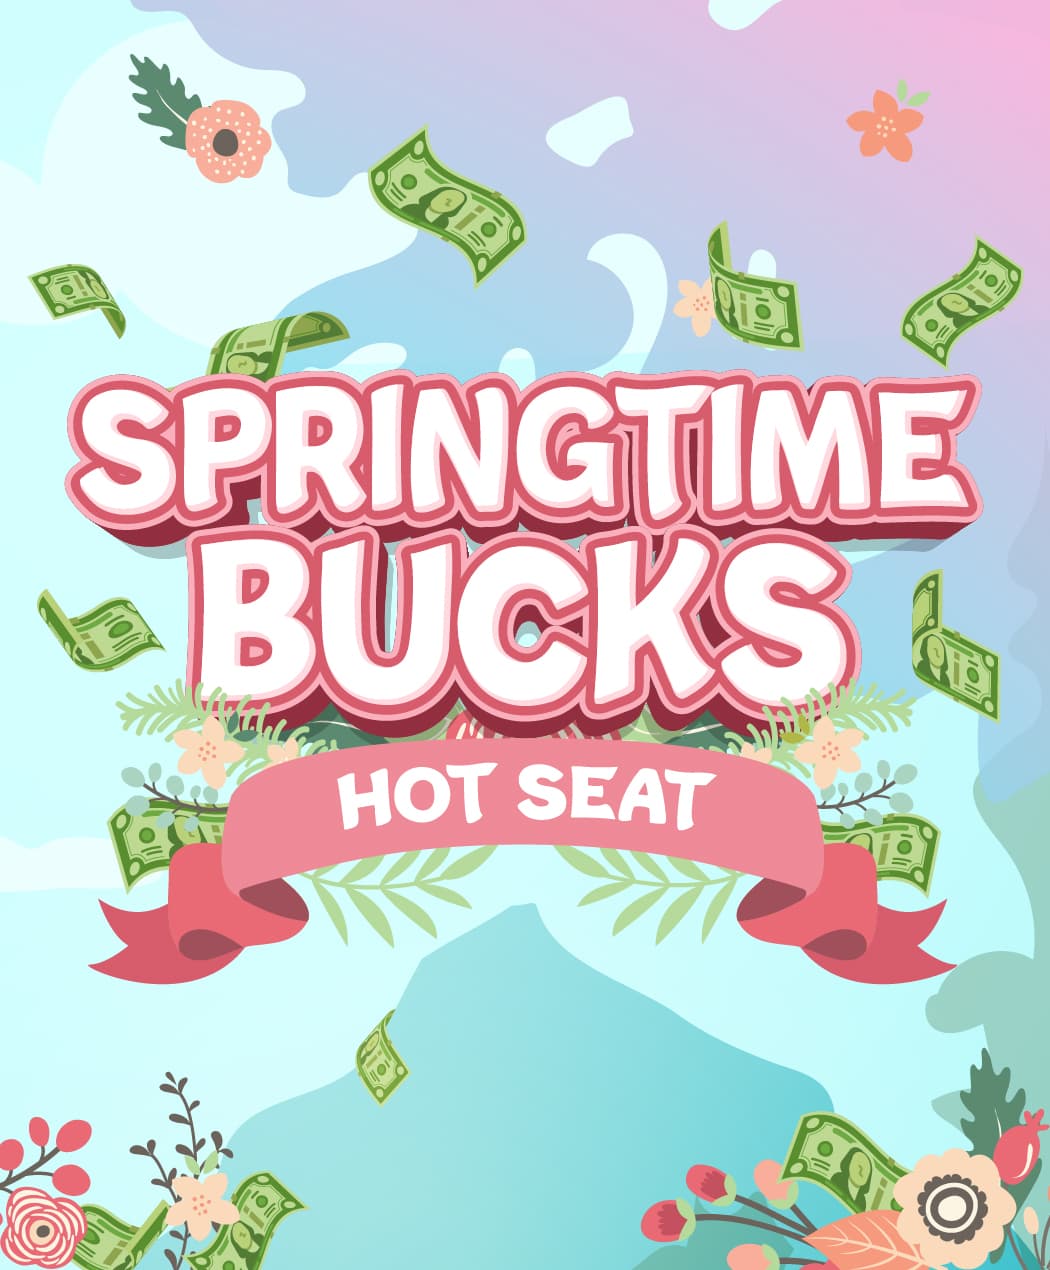 Springtime Bucks Hot Seat